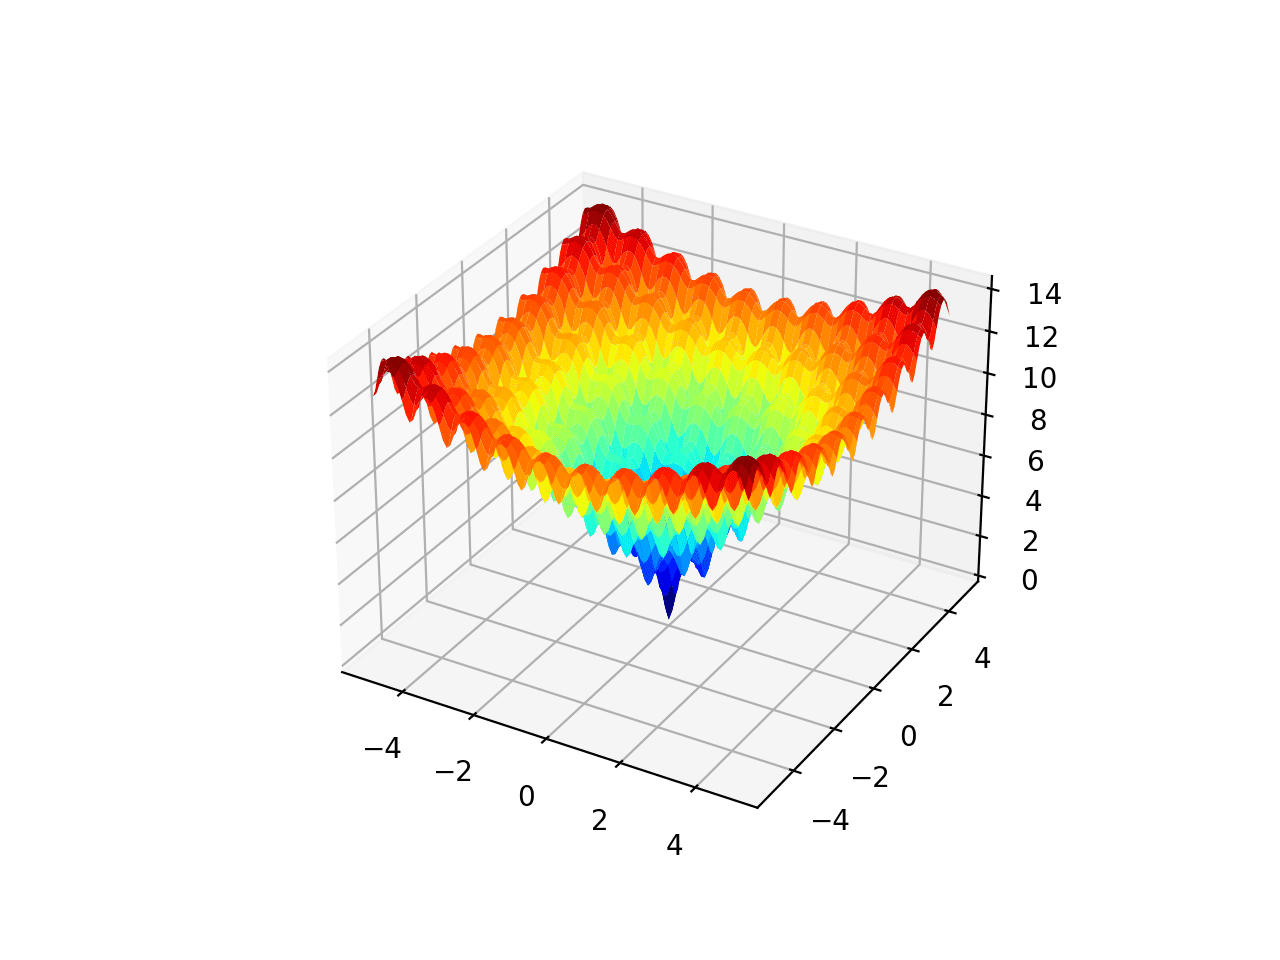 Surface Plot of Multimodal Optimization Function 1